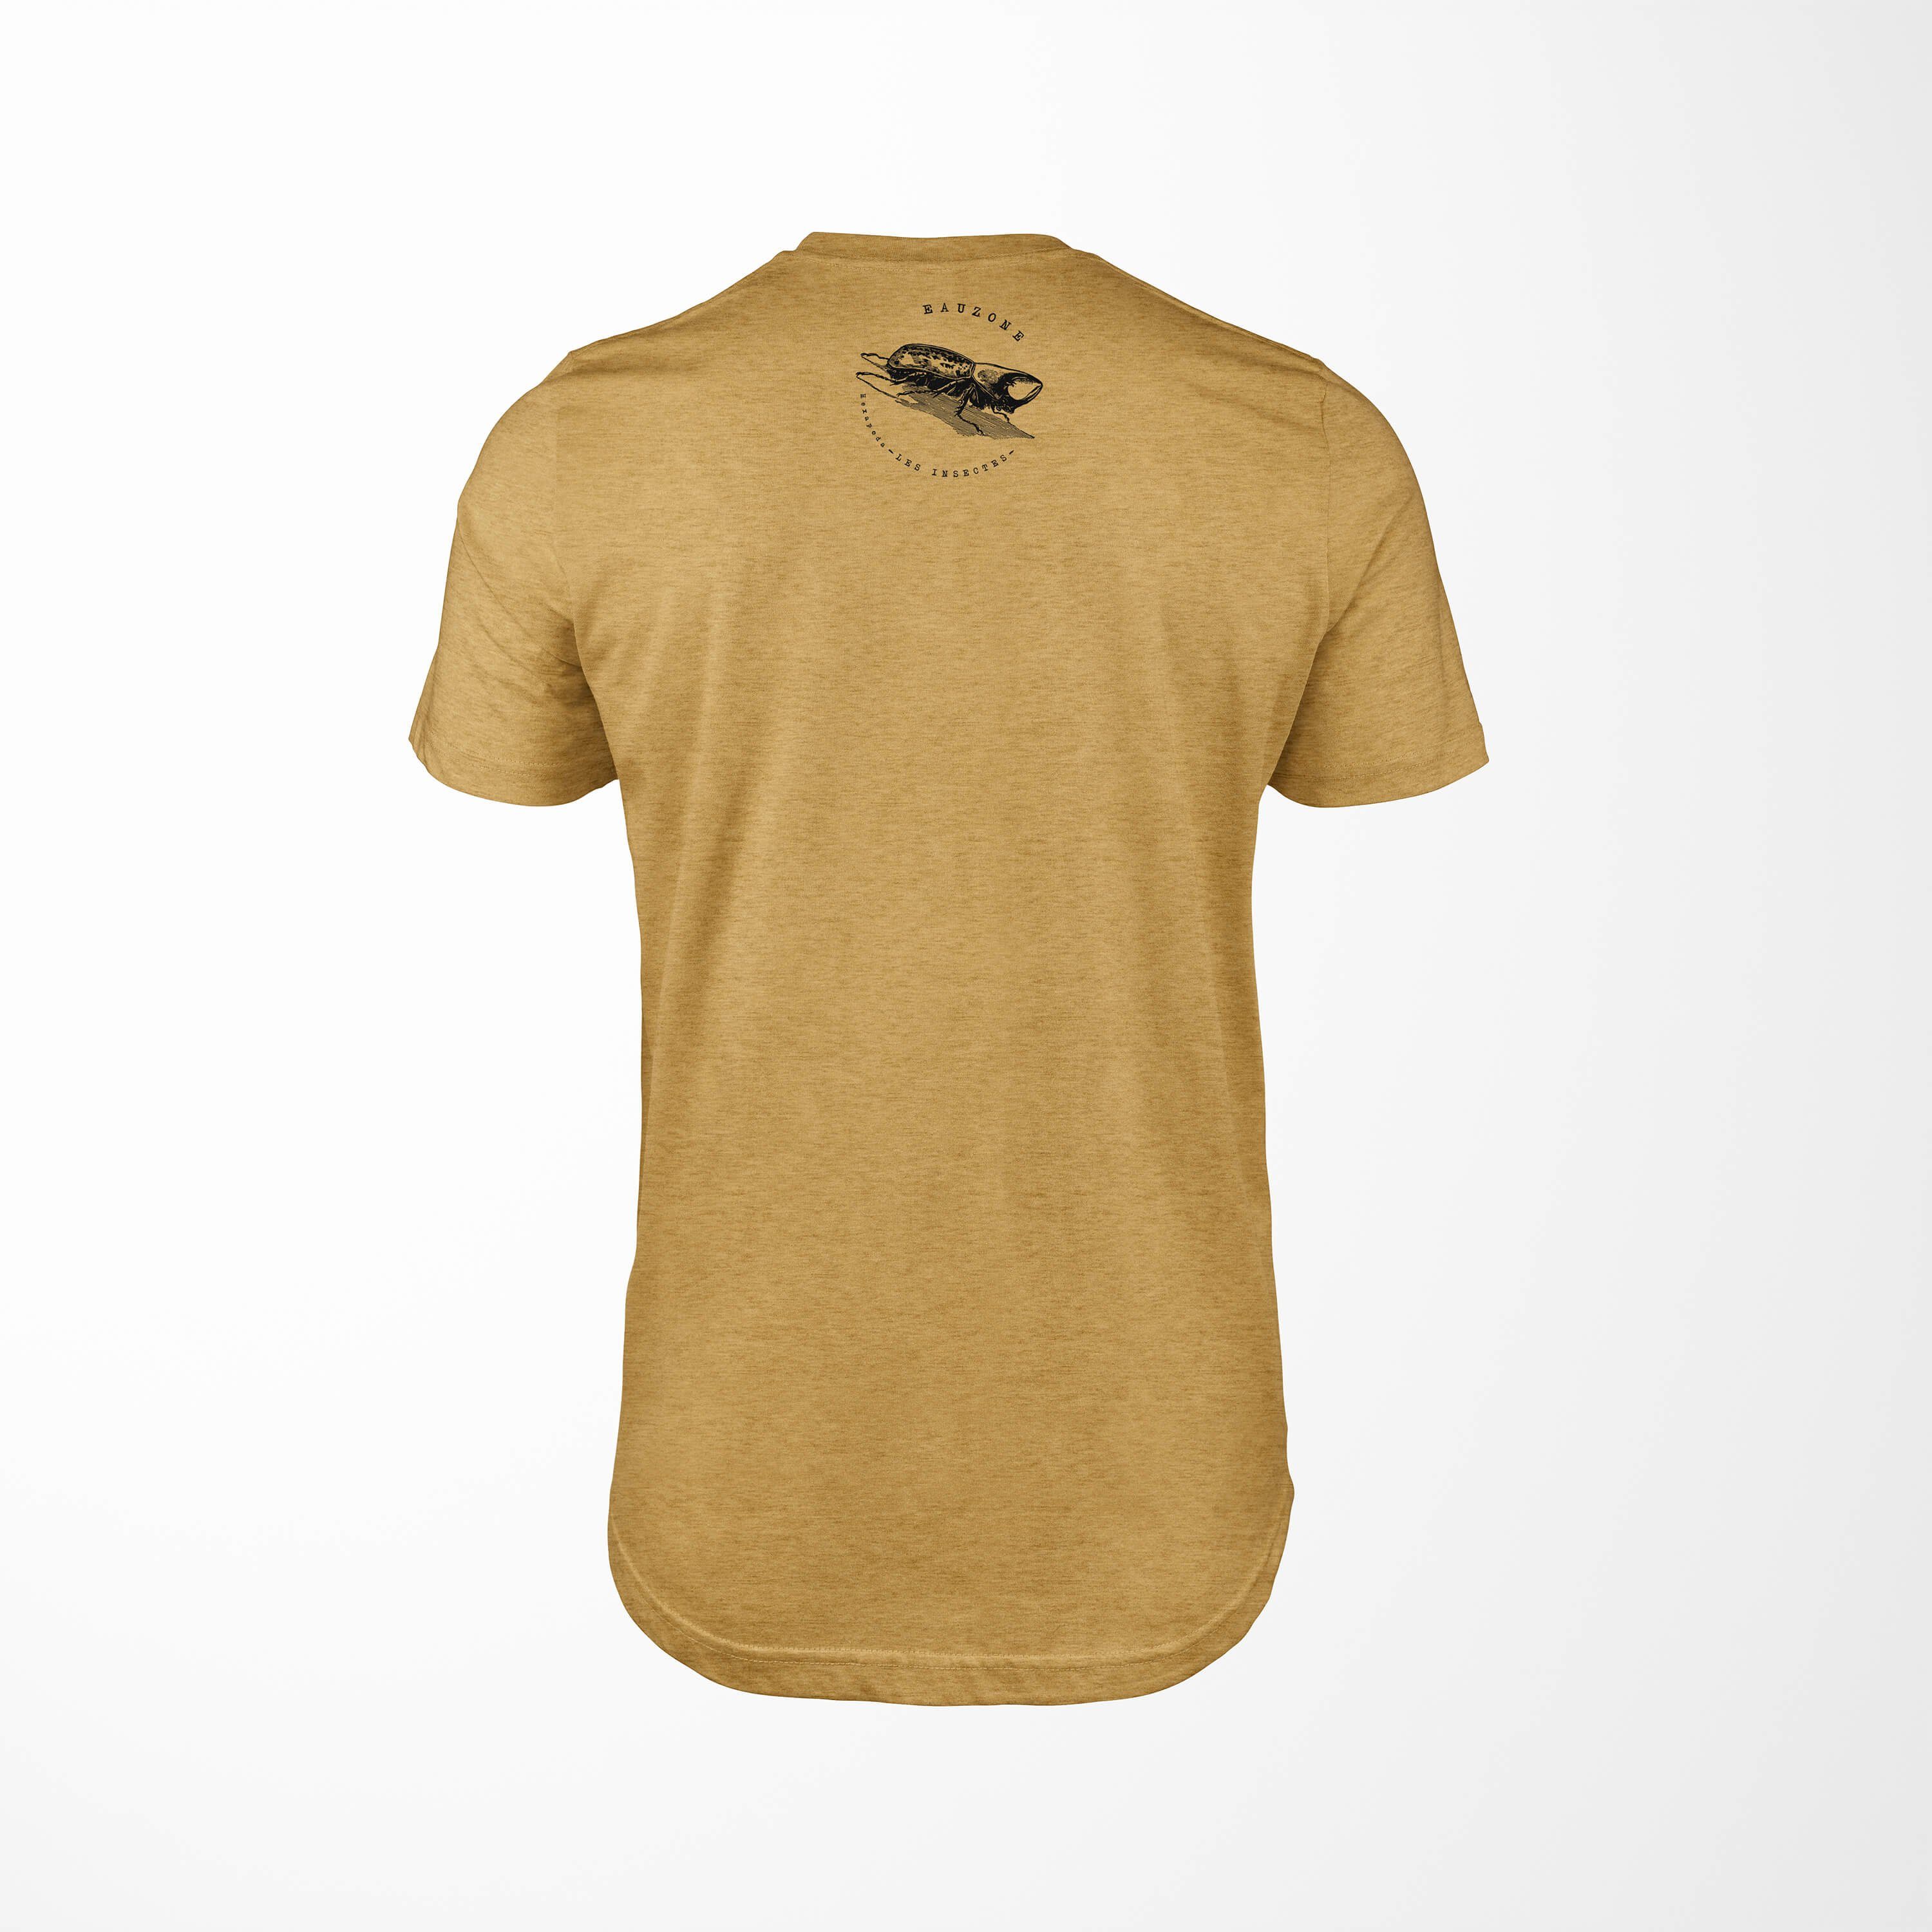 Hexapoda T-Shirt Gold T-Shirt Herren Art Rhinoceros Sinus Beetle Antique